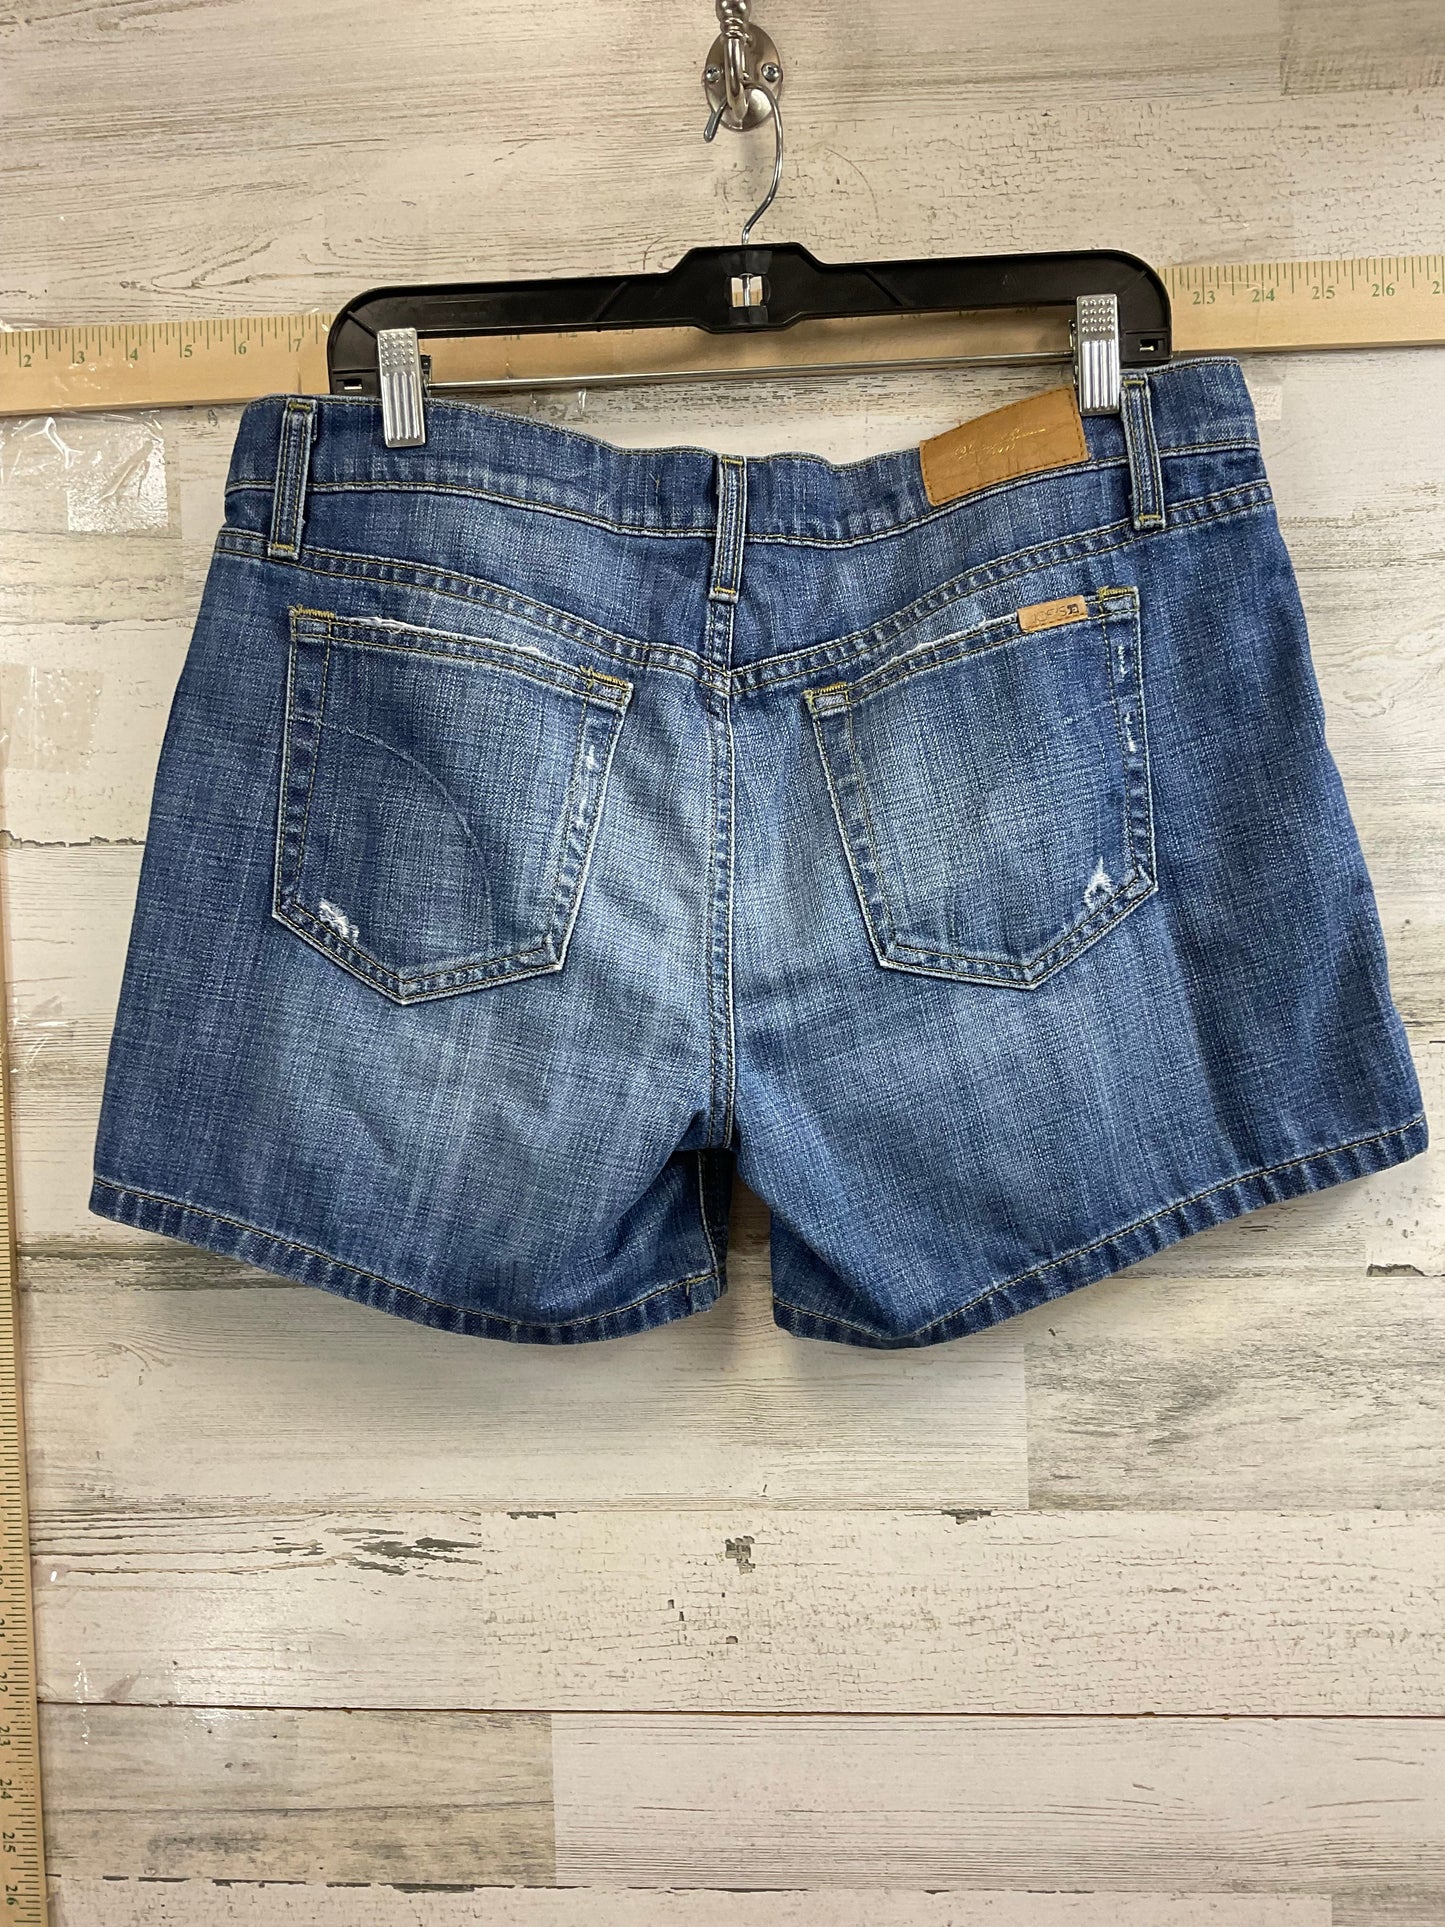 Blue Denim Shorts Joes Jeans, Size 12